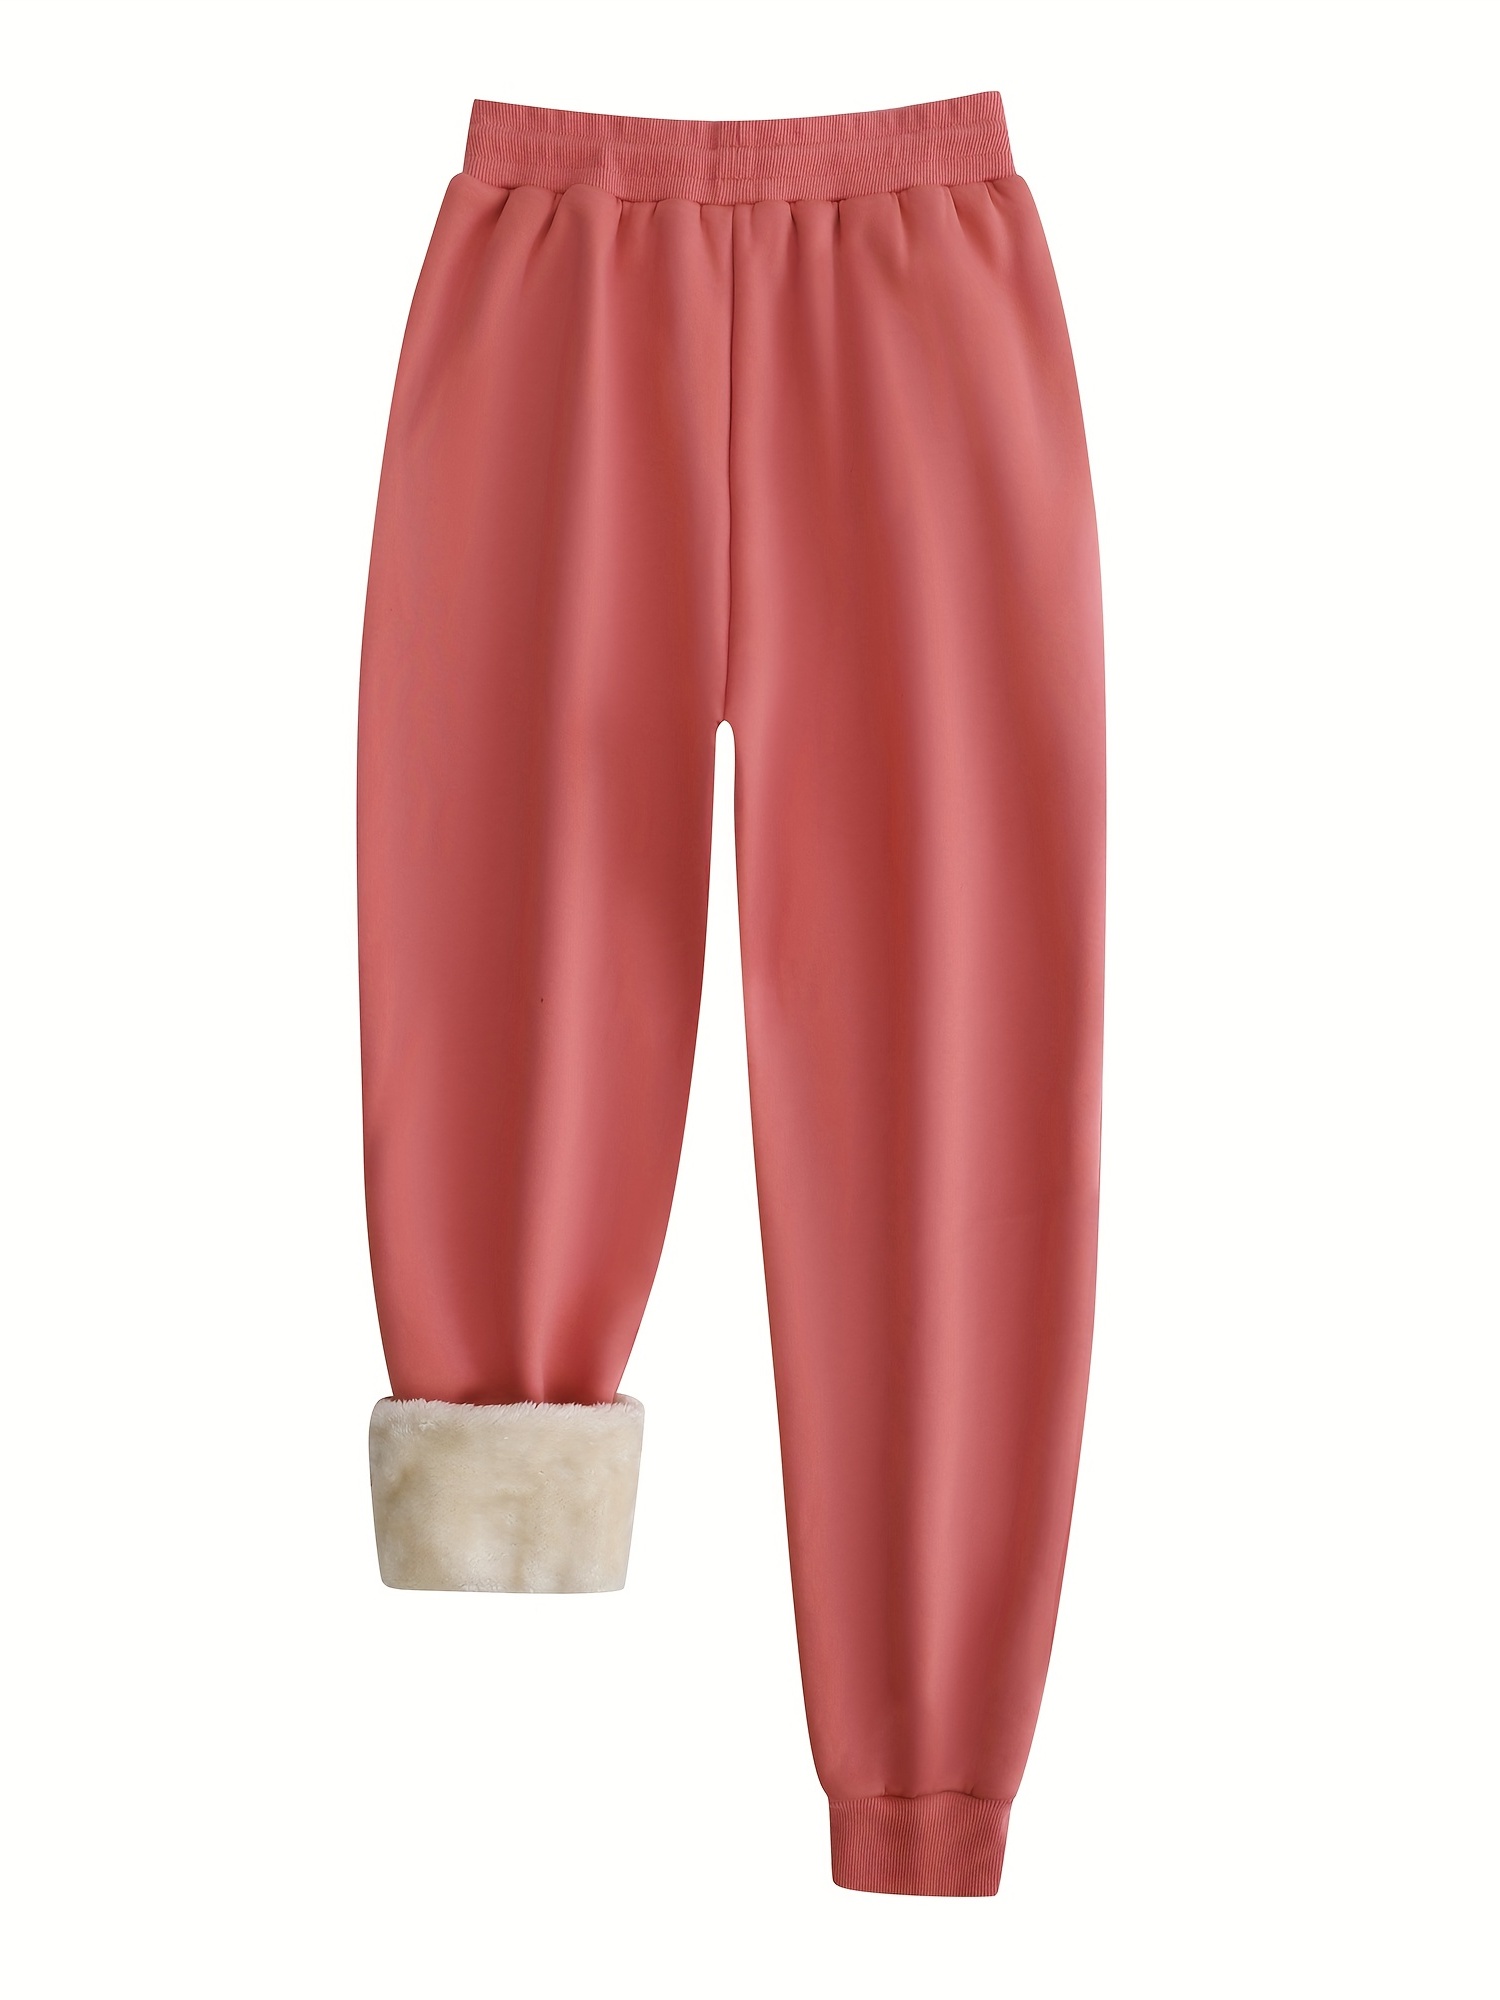 plush thermal pants, winter plush thermal pants casual drawstring pocket pants womens clothing details 9